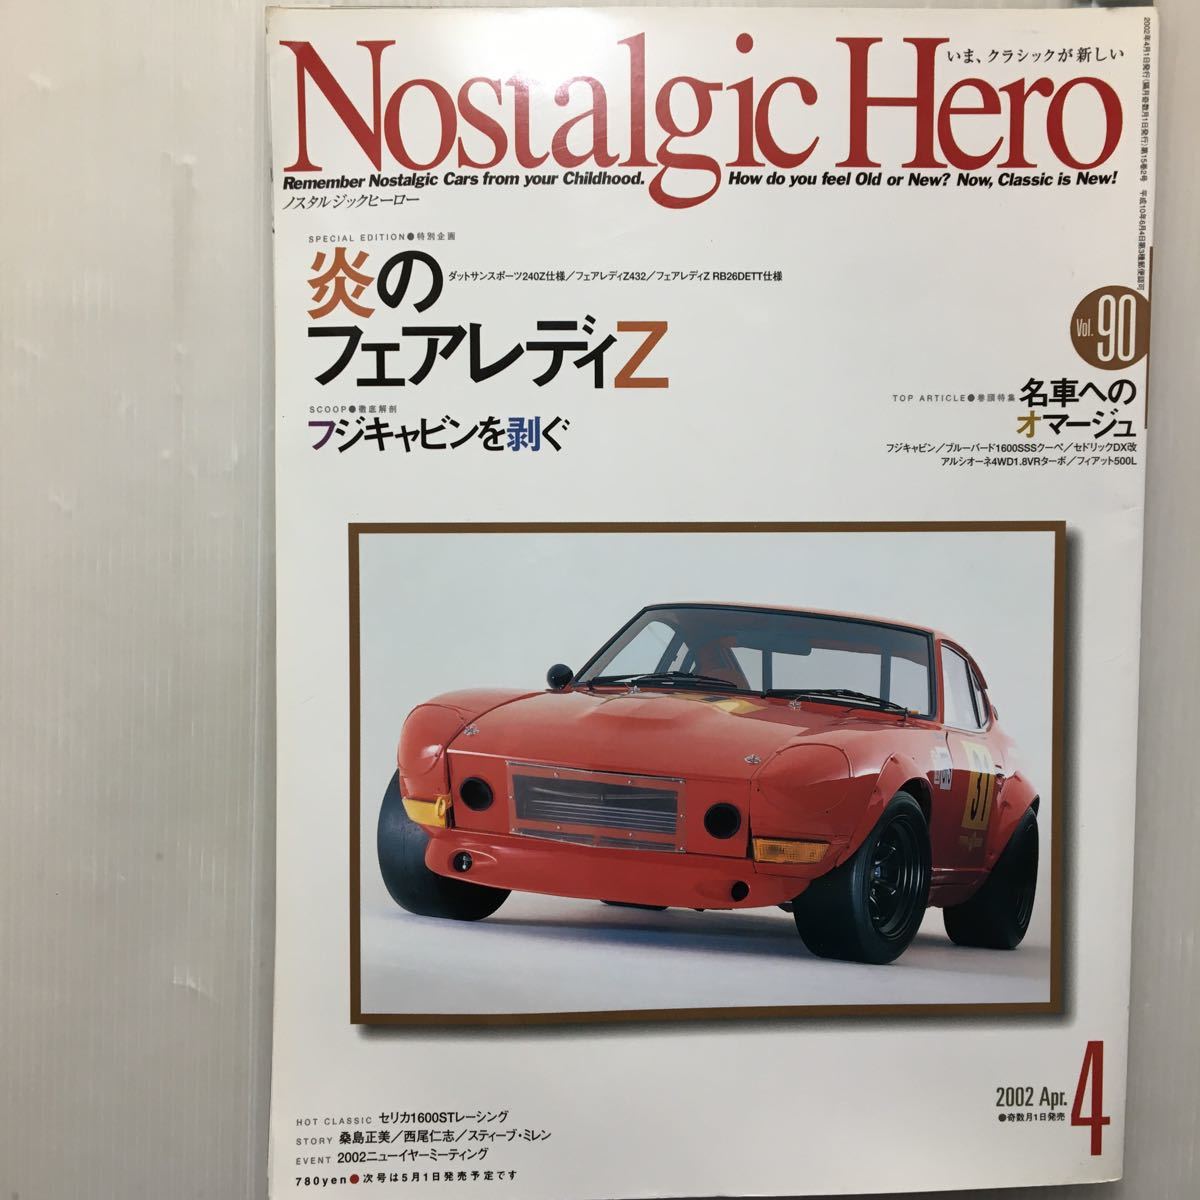 zaa-510♪Nostalgic Hero (ノスタルジック ヒーロー)　vol.90 2002-4 雑誌 2002/1/1 辻　好樹 (編集)株式会社芸文社